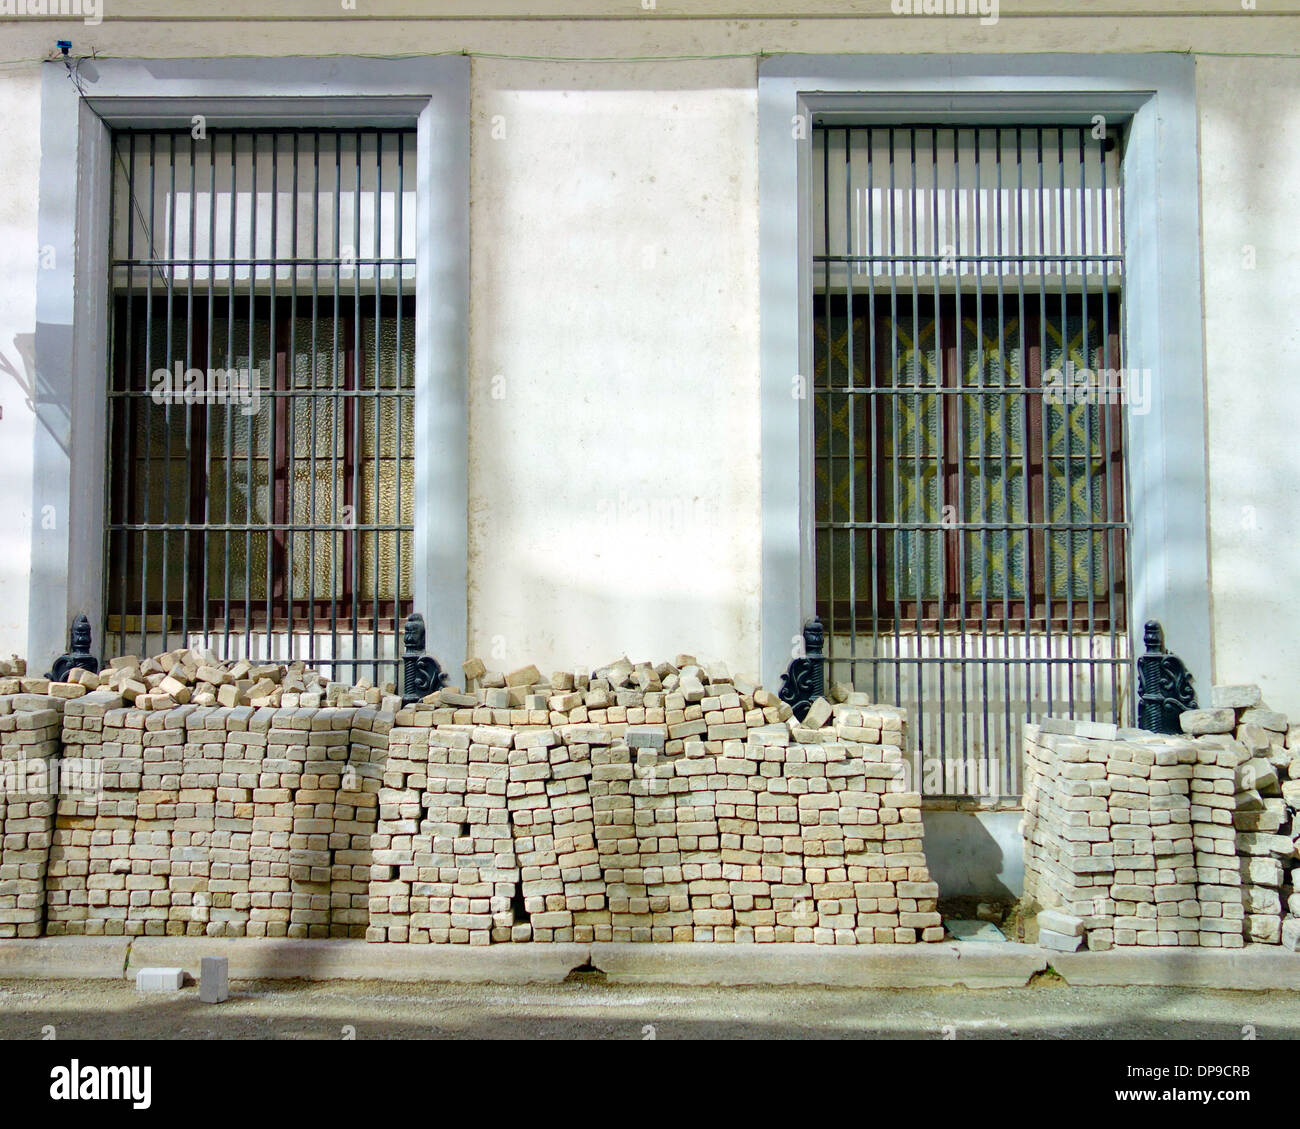 Construction material in a street in Havana, Cuba Stock Photo